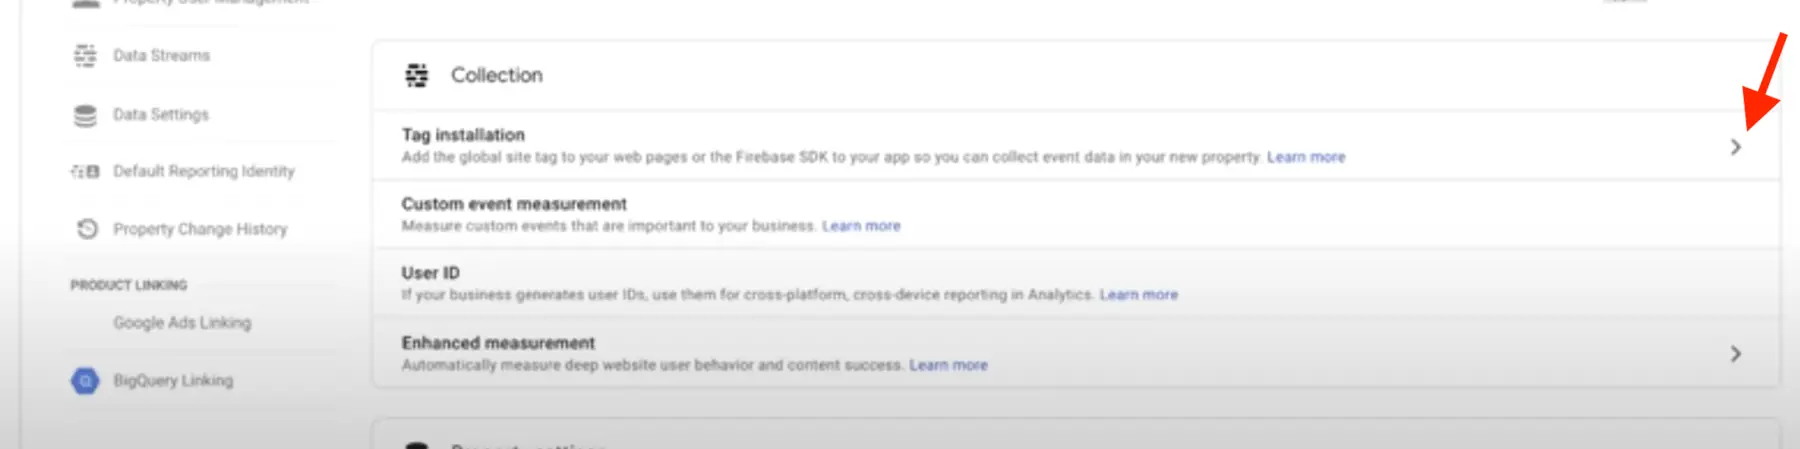 Screenshot of tag installation for Google Analytics 4.0